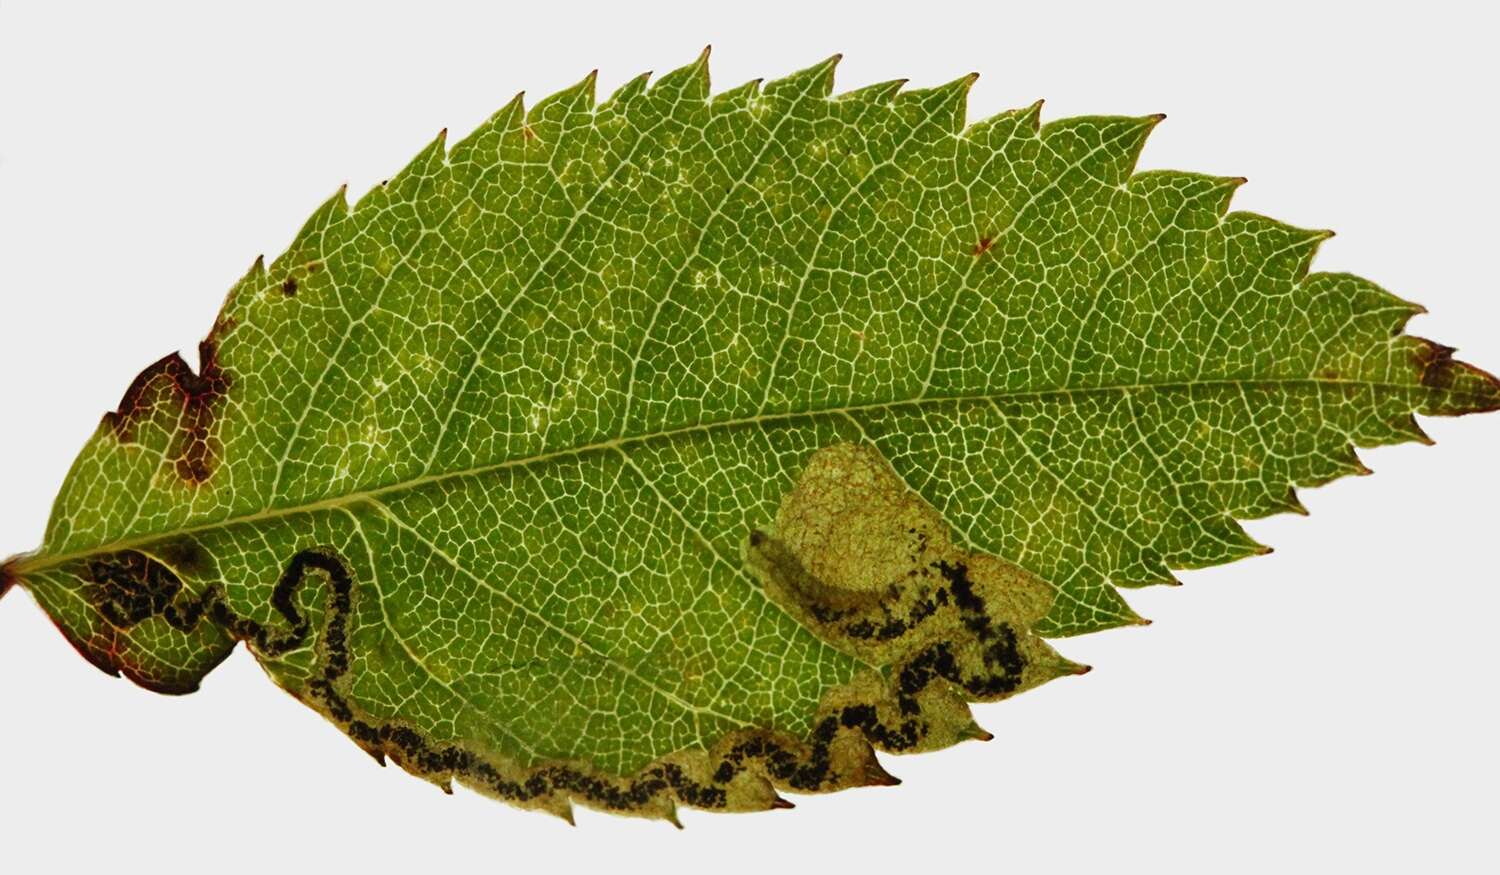 Image of Ectoedemia angulifasciella (Stainton 1849) Bradley et al. 1972